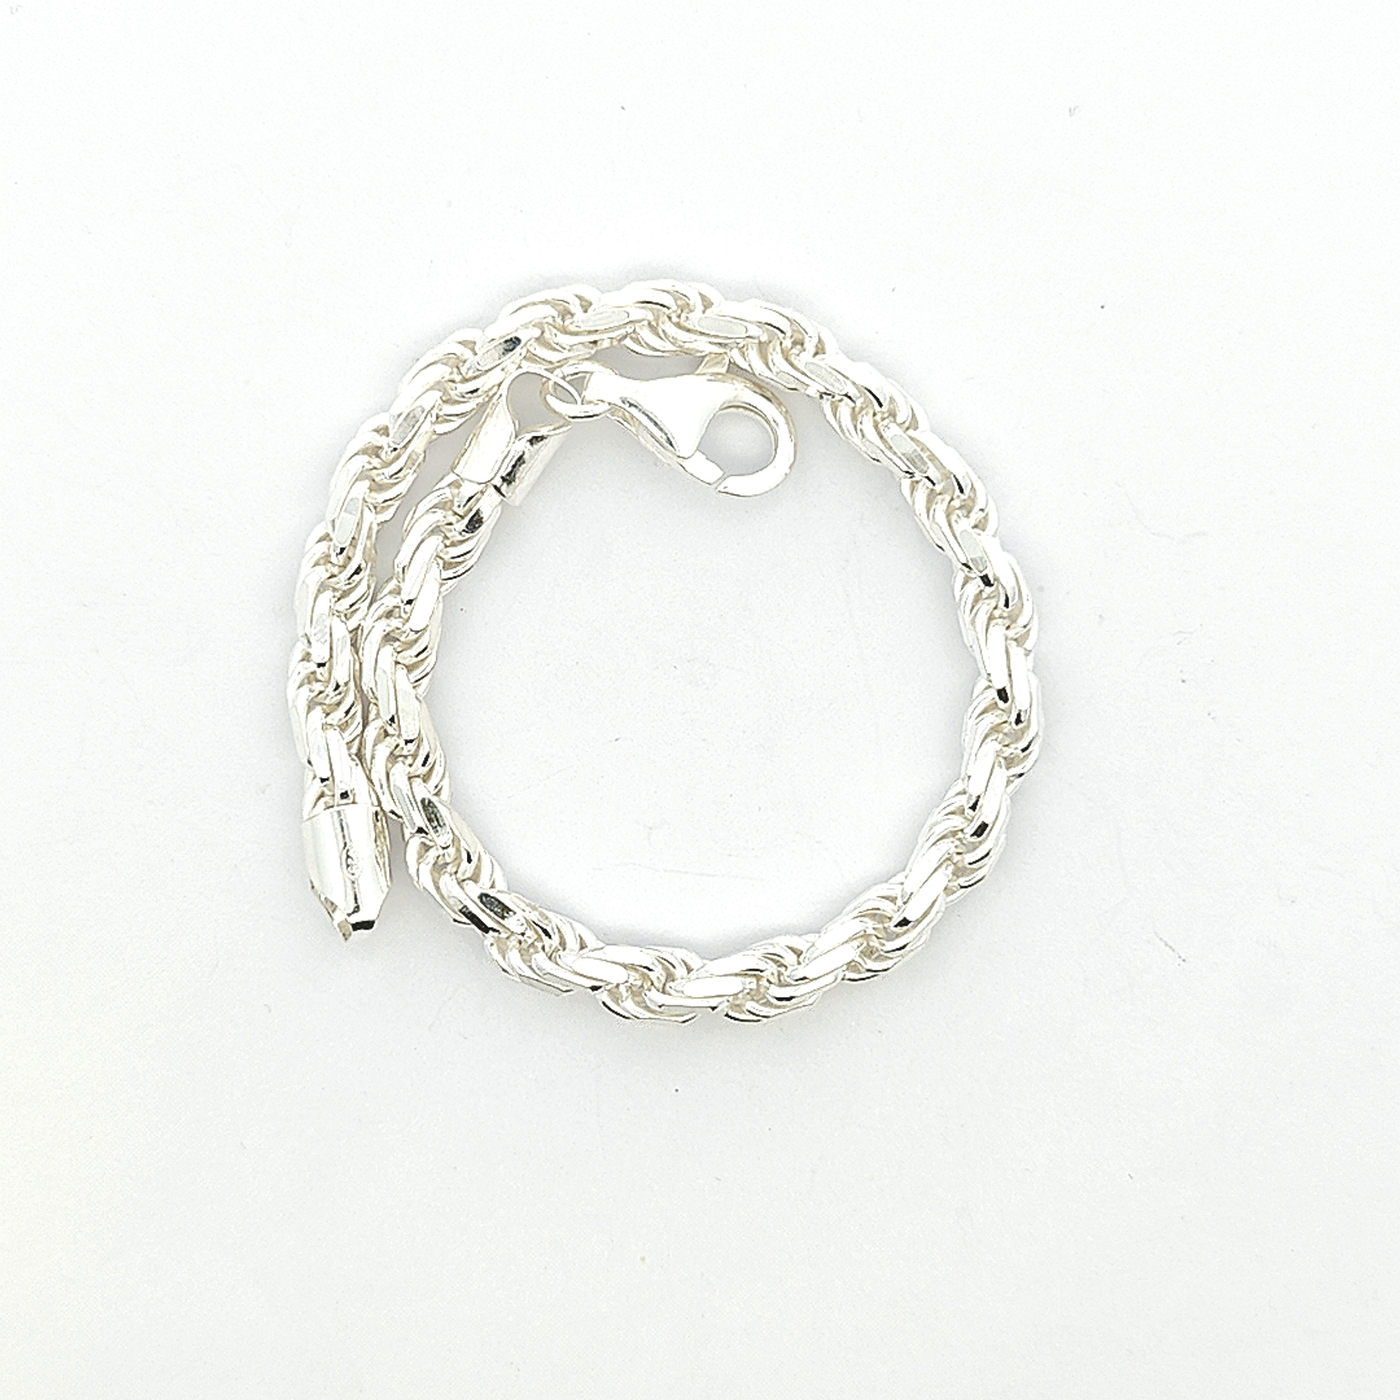 Sterling Silver Diamond Cut Rope Bracelet, Width 6mm - boothandbooth